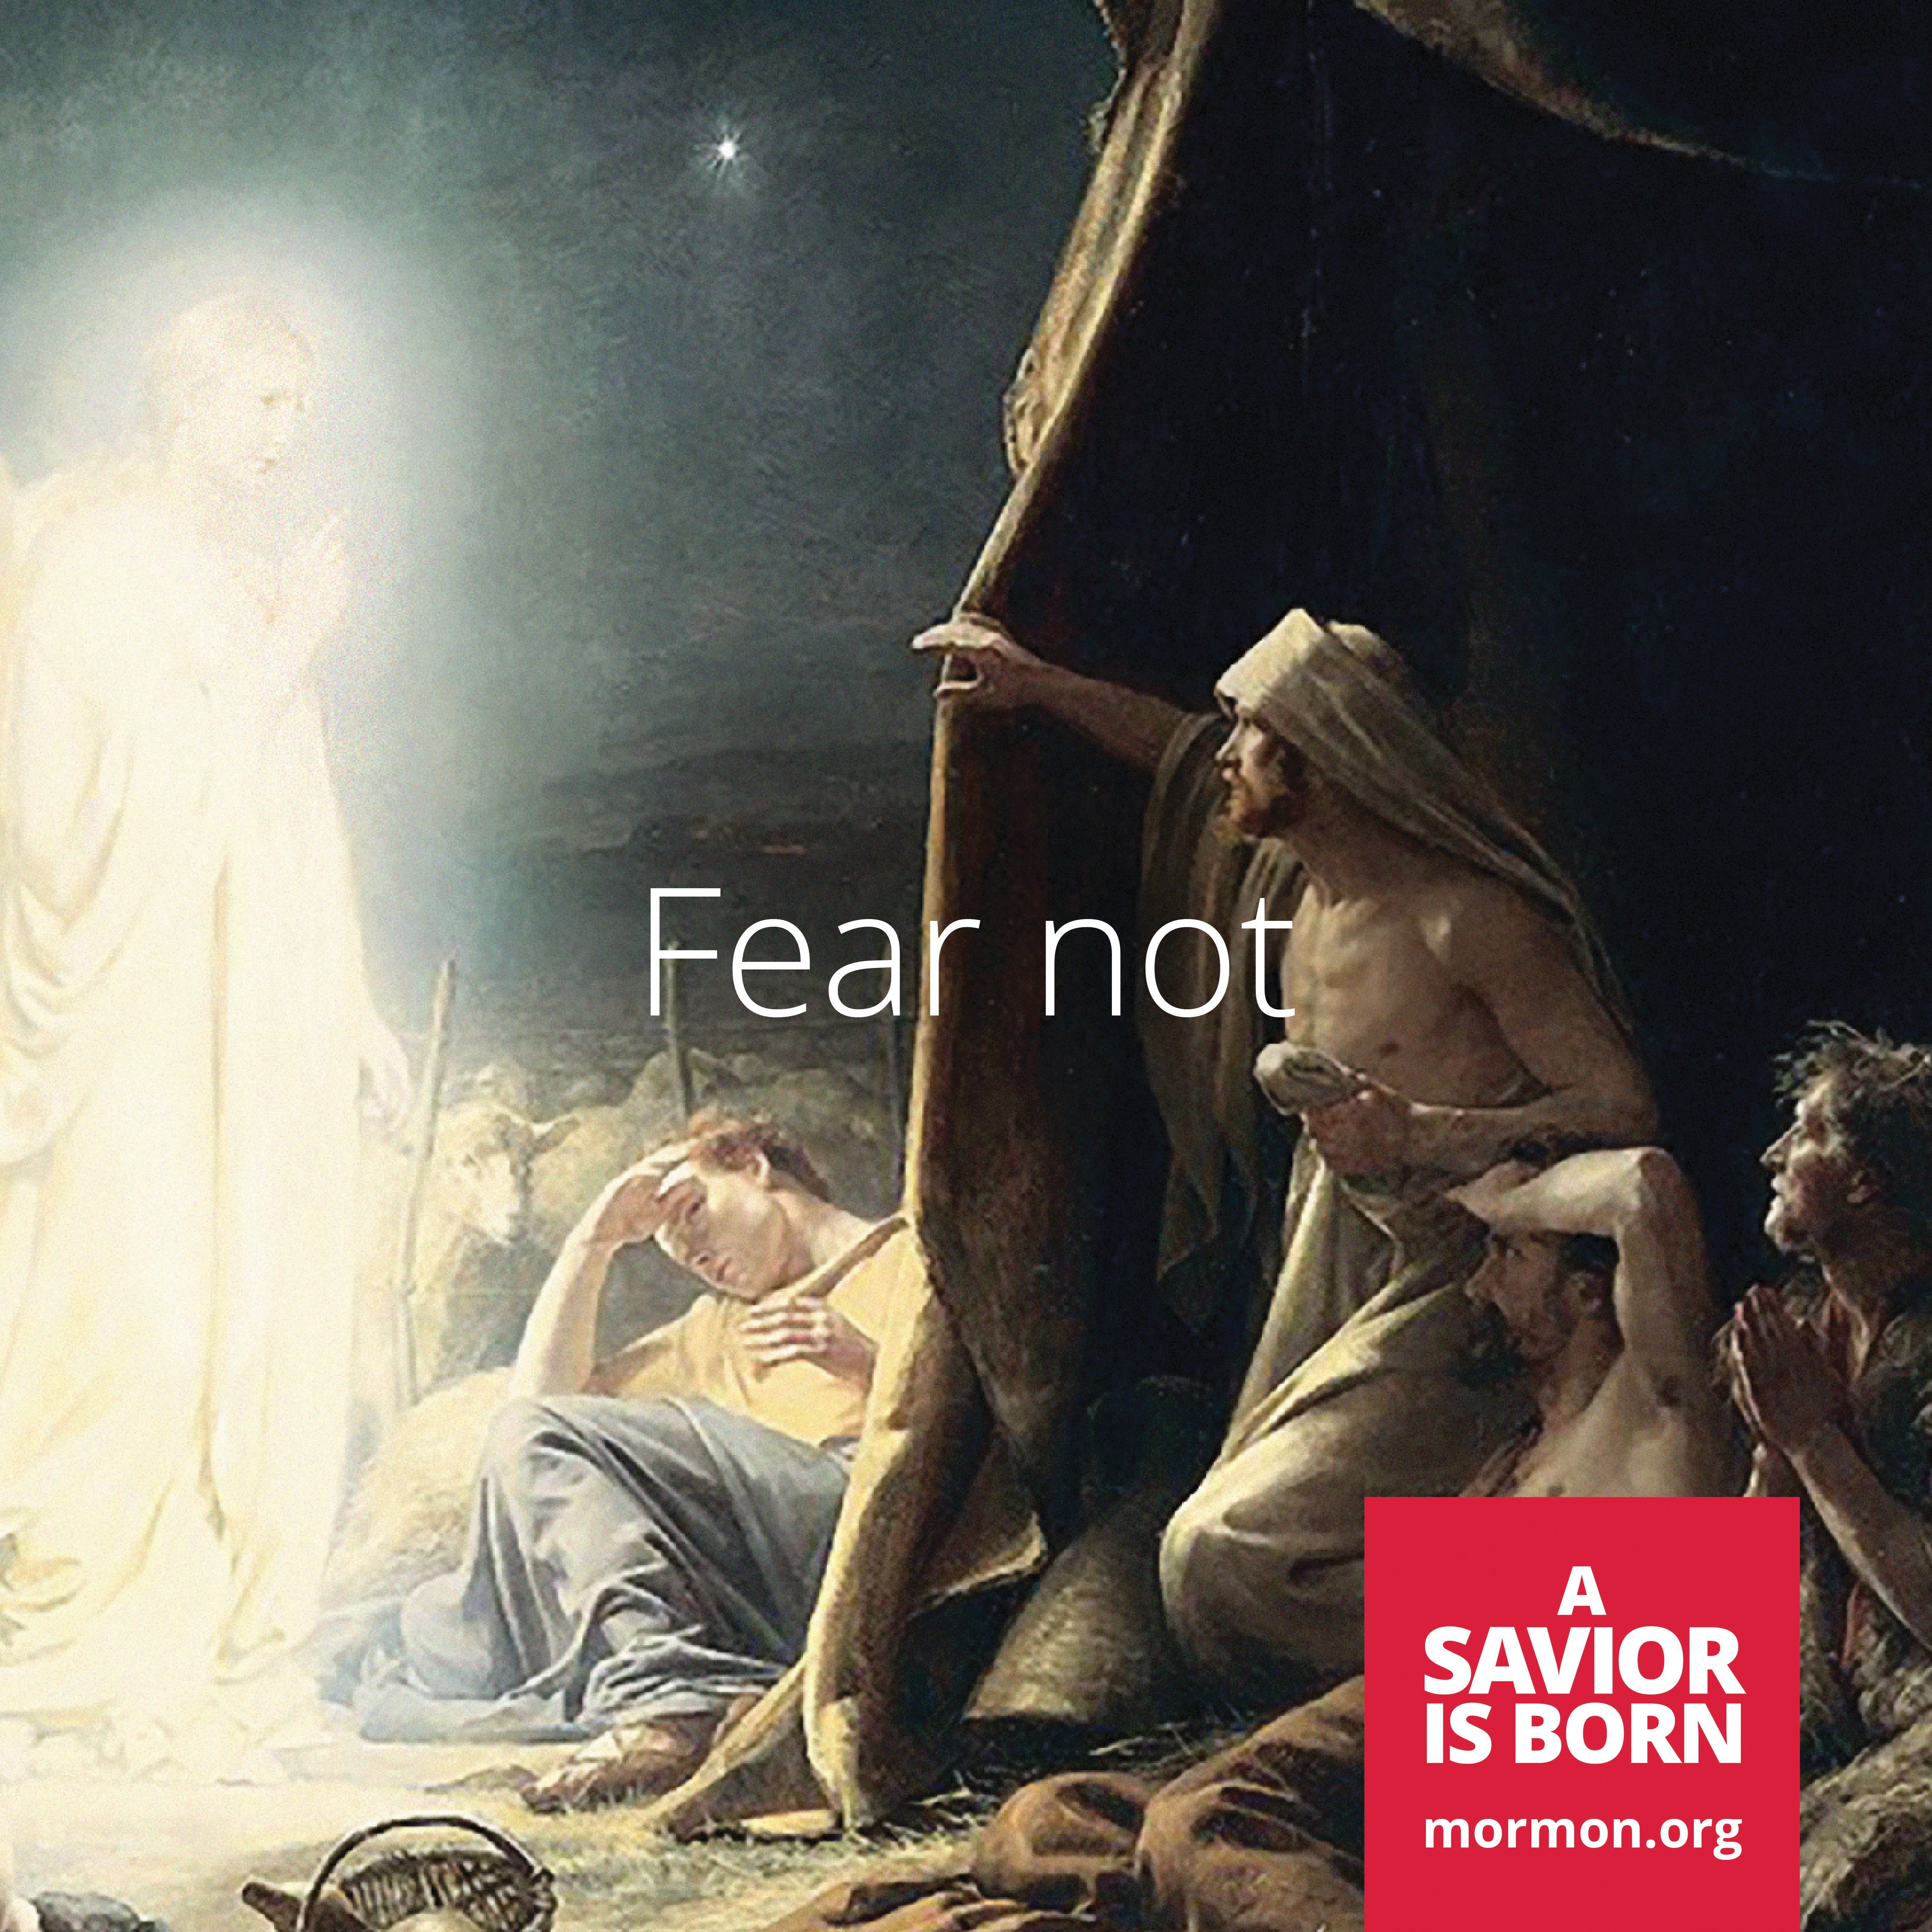 “Fear not.” —mormon.org, “A Savior Is Born”